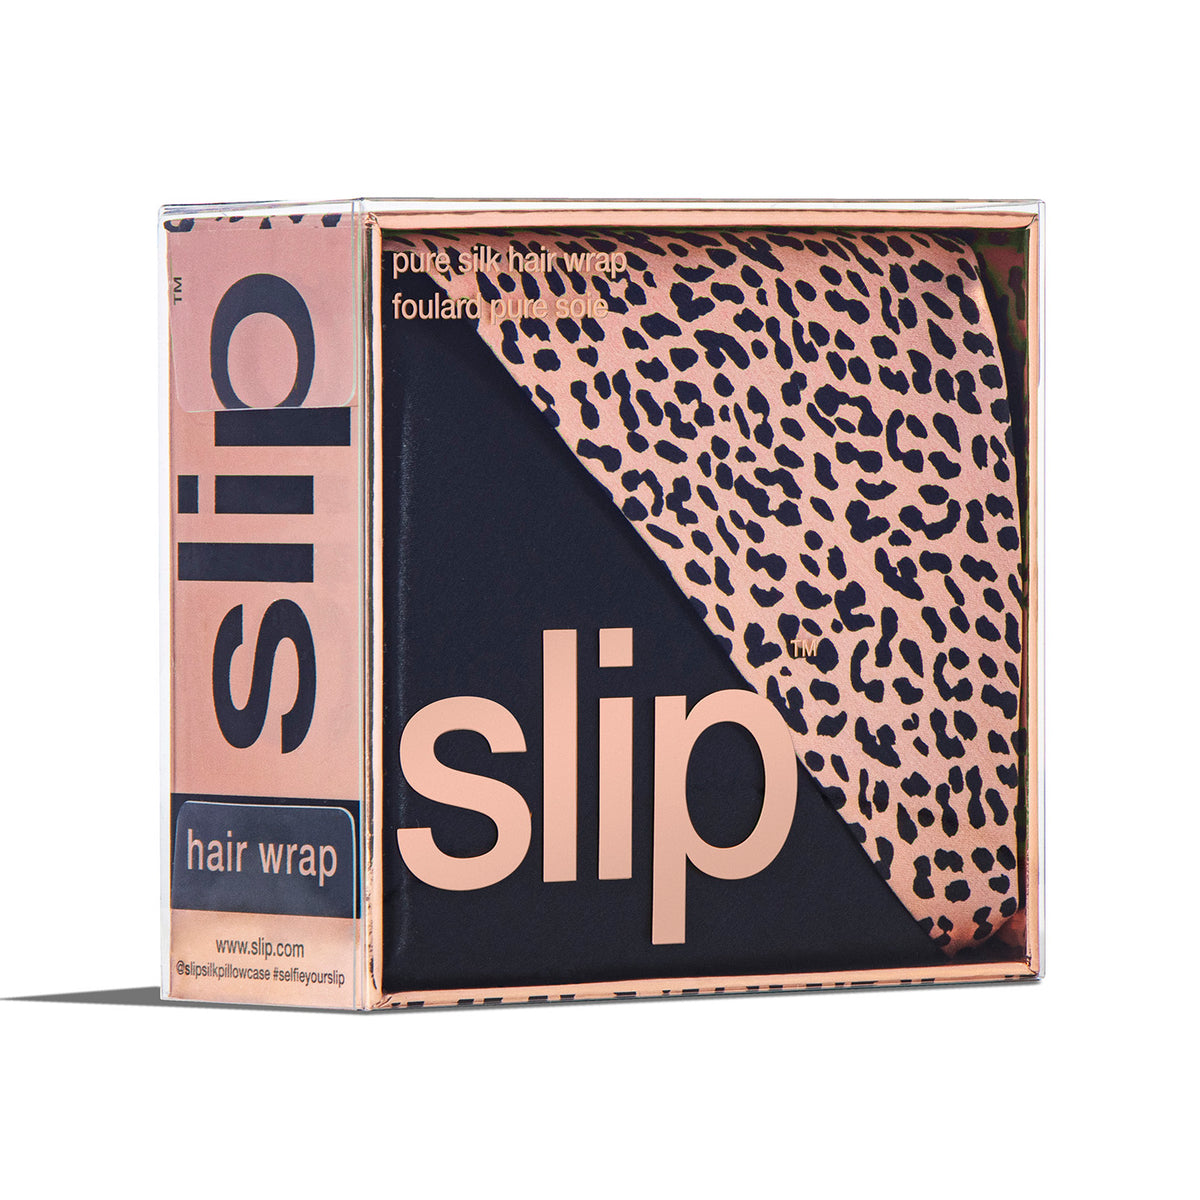 Ms. Remi Leopard Silky Mesh Wrap, Classic Leopard – Annie